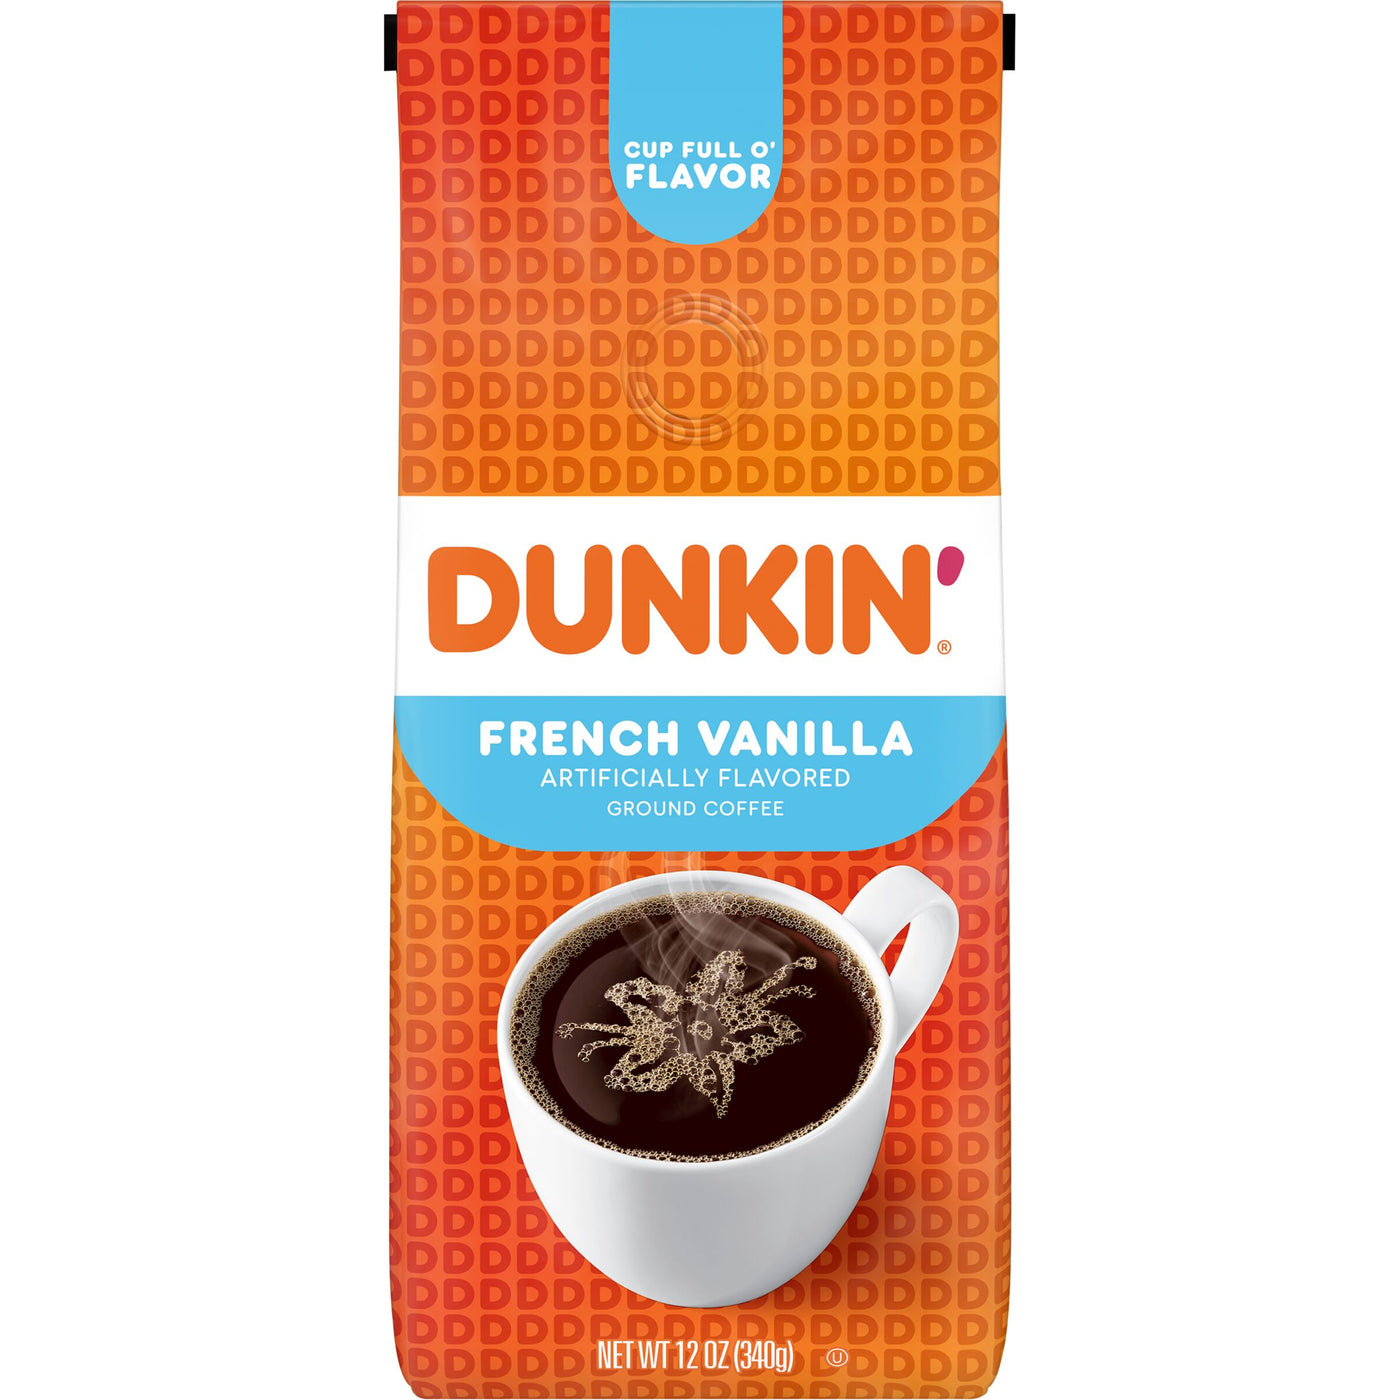 Dunkin' French Vanilla Flavored Ground Coffee